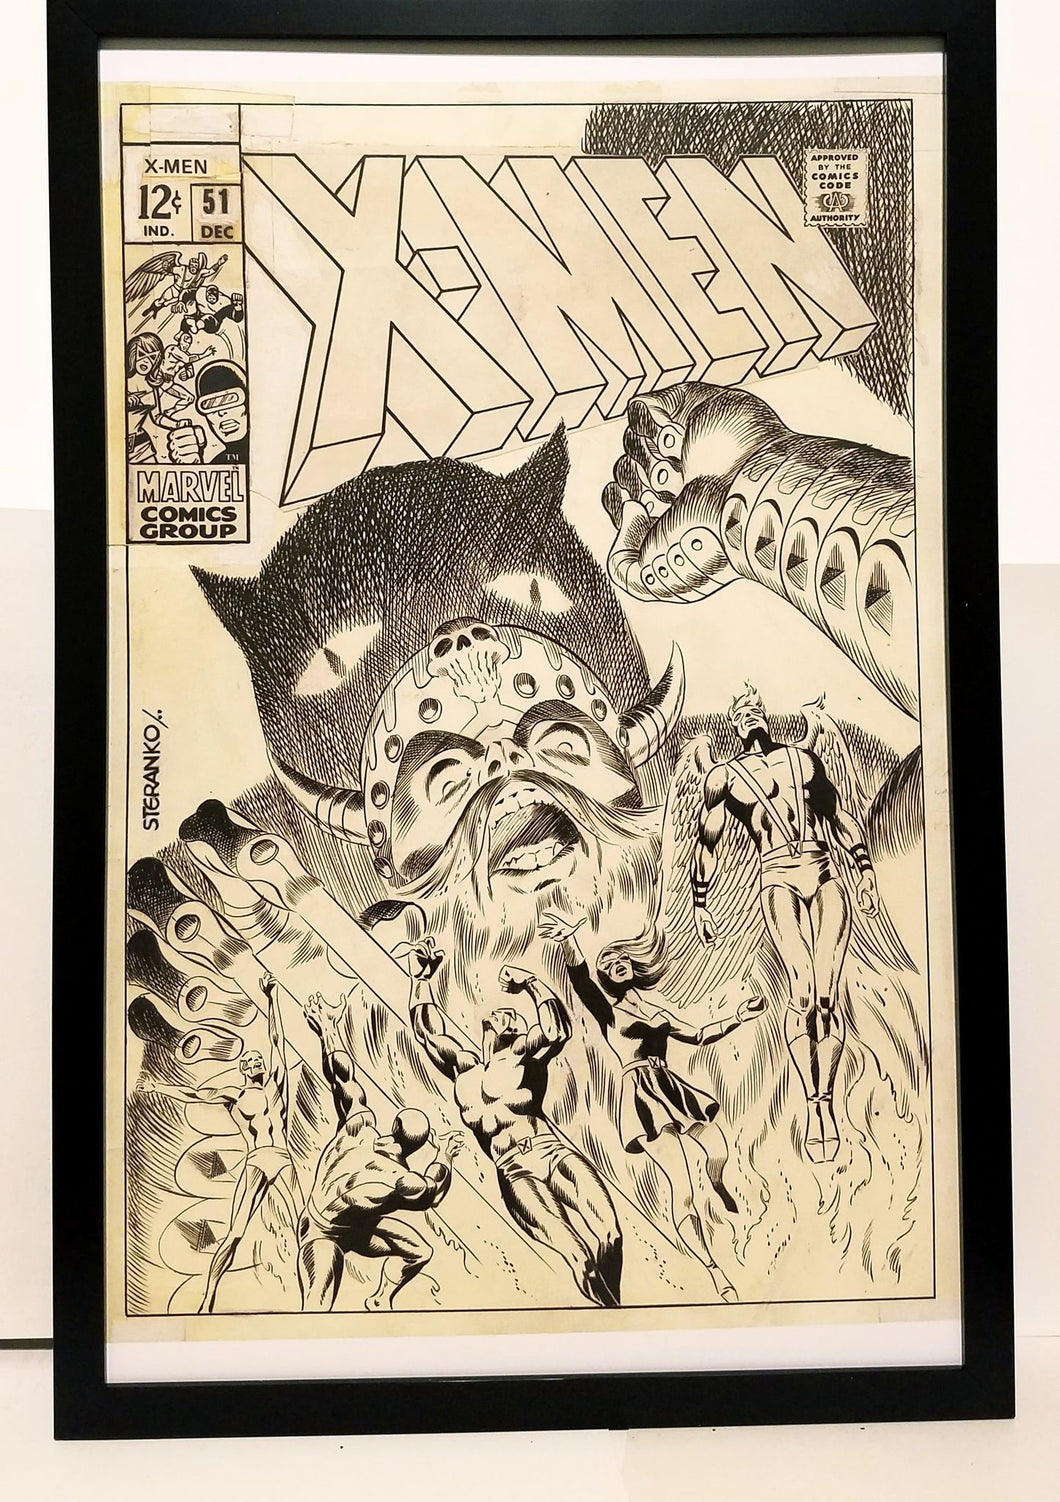 X-Men #51 by Jim Steranko 11x17 FRAMED Original Art Poster Marvel Comics